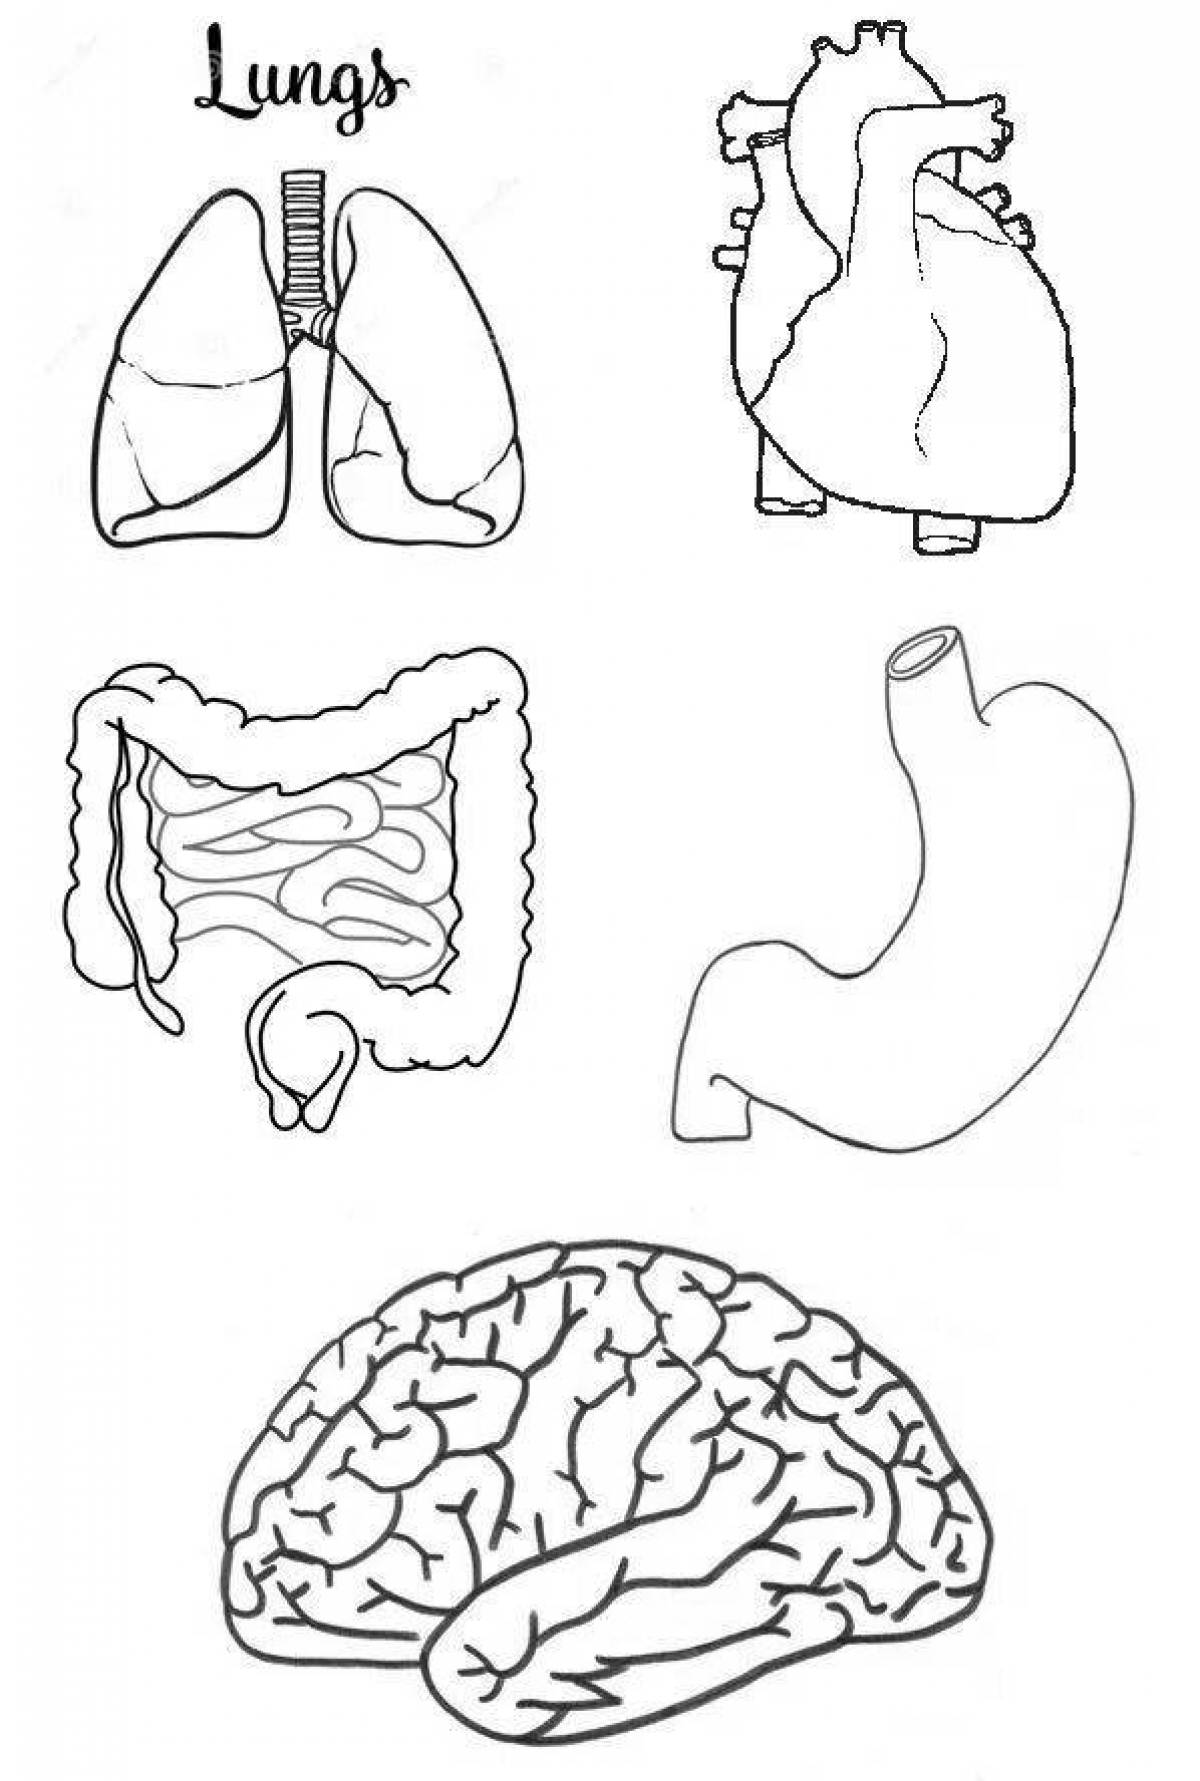 Pleasant coloring of human organs